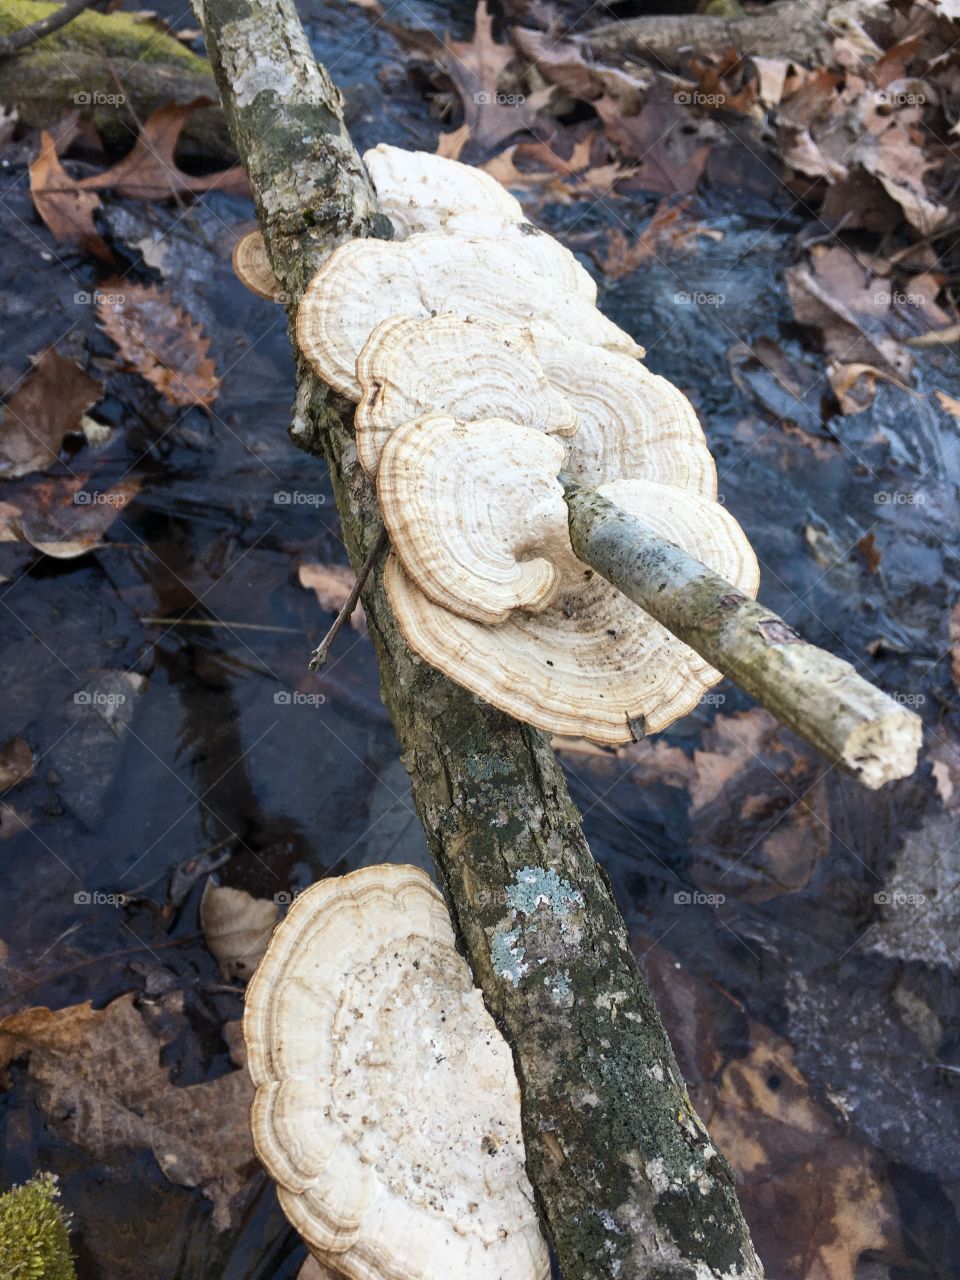 Winter fungi